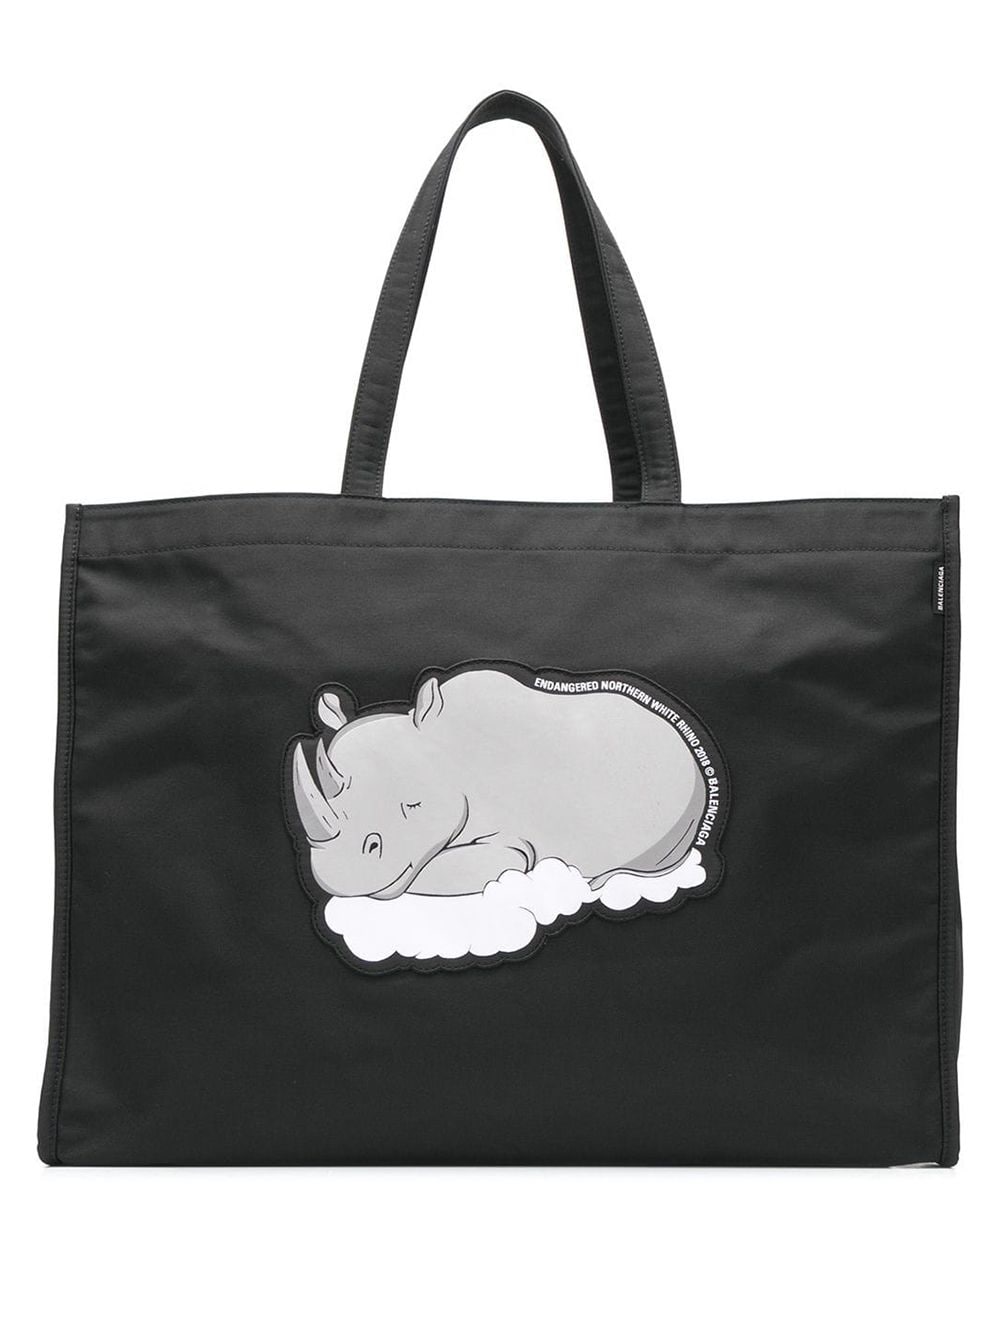 фото Balenciaga сумка-шоппер с изображением носорога